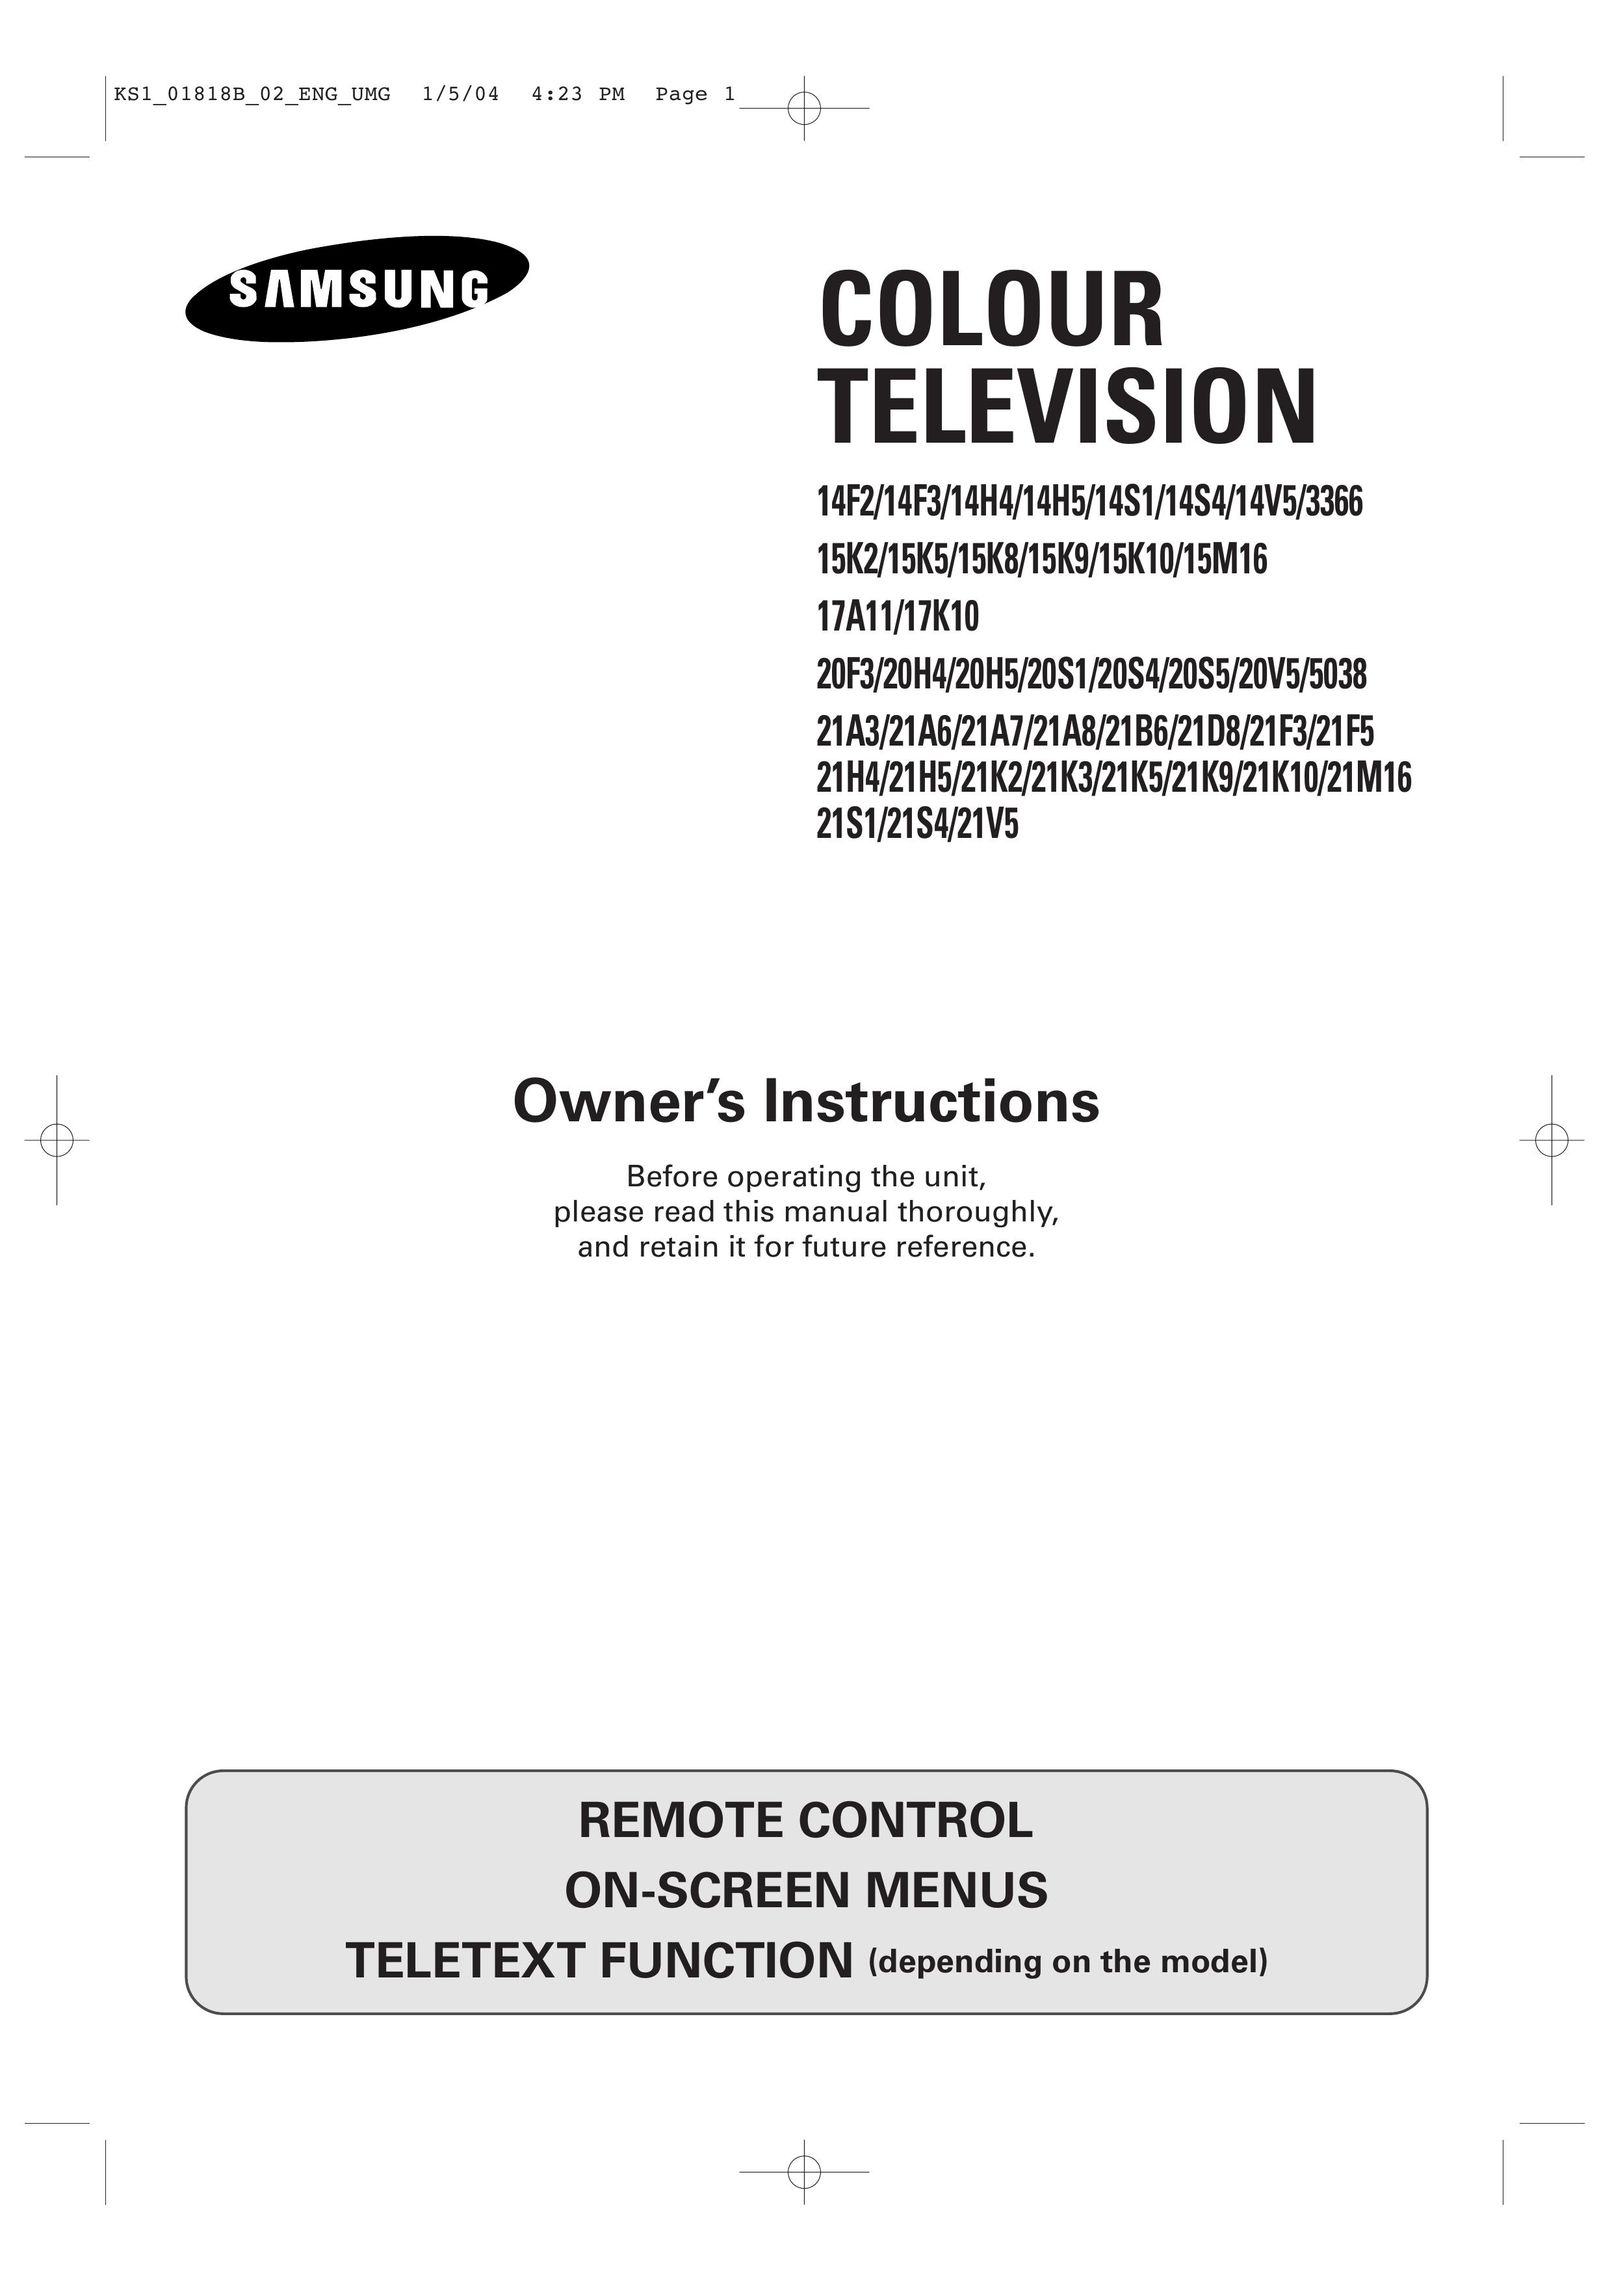 Samsung 21M16 CRT Television User Manual